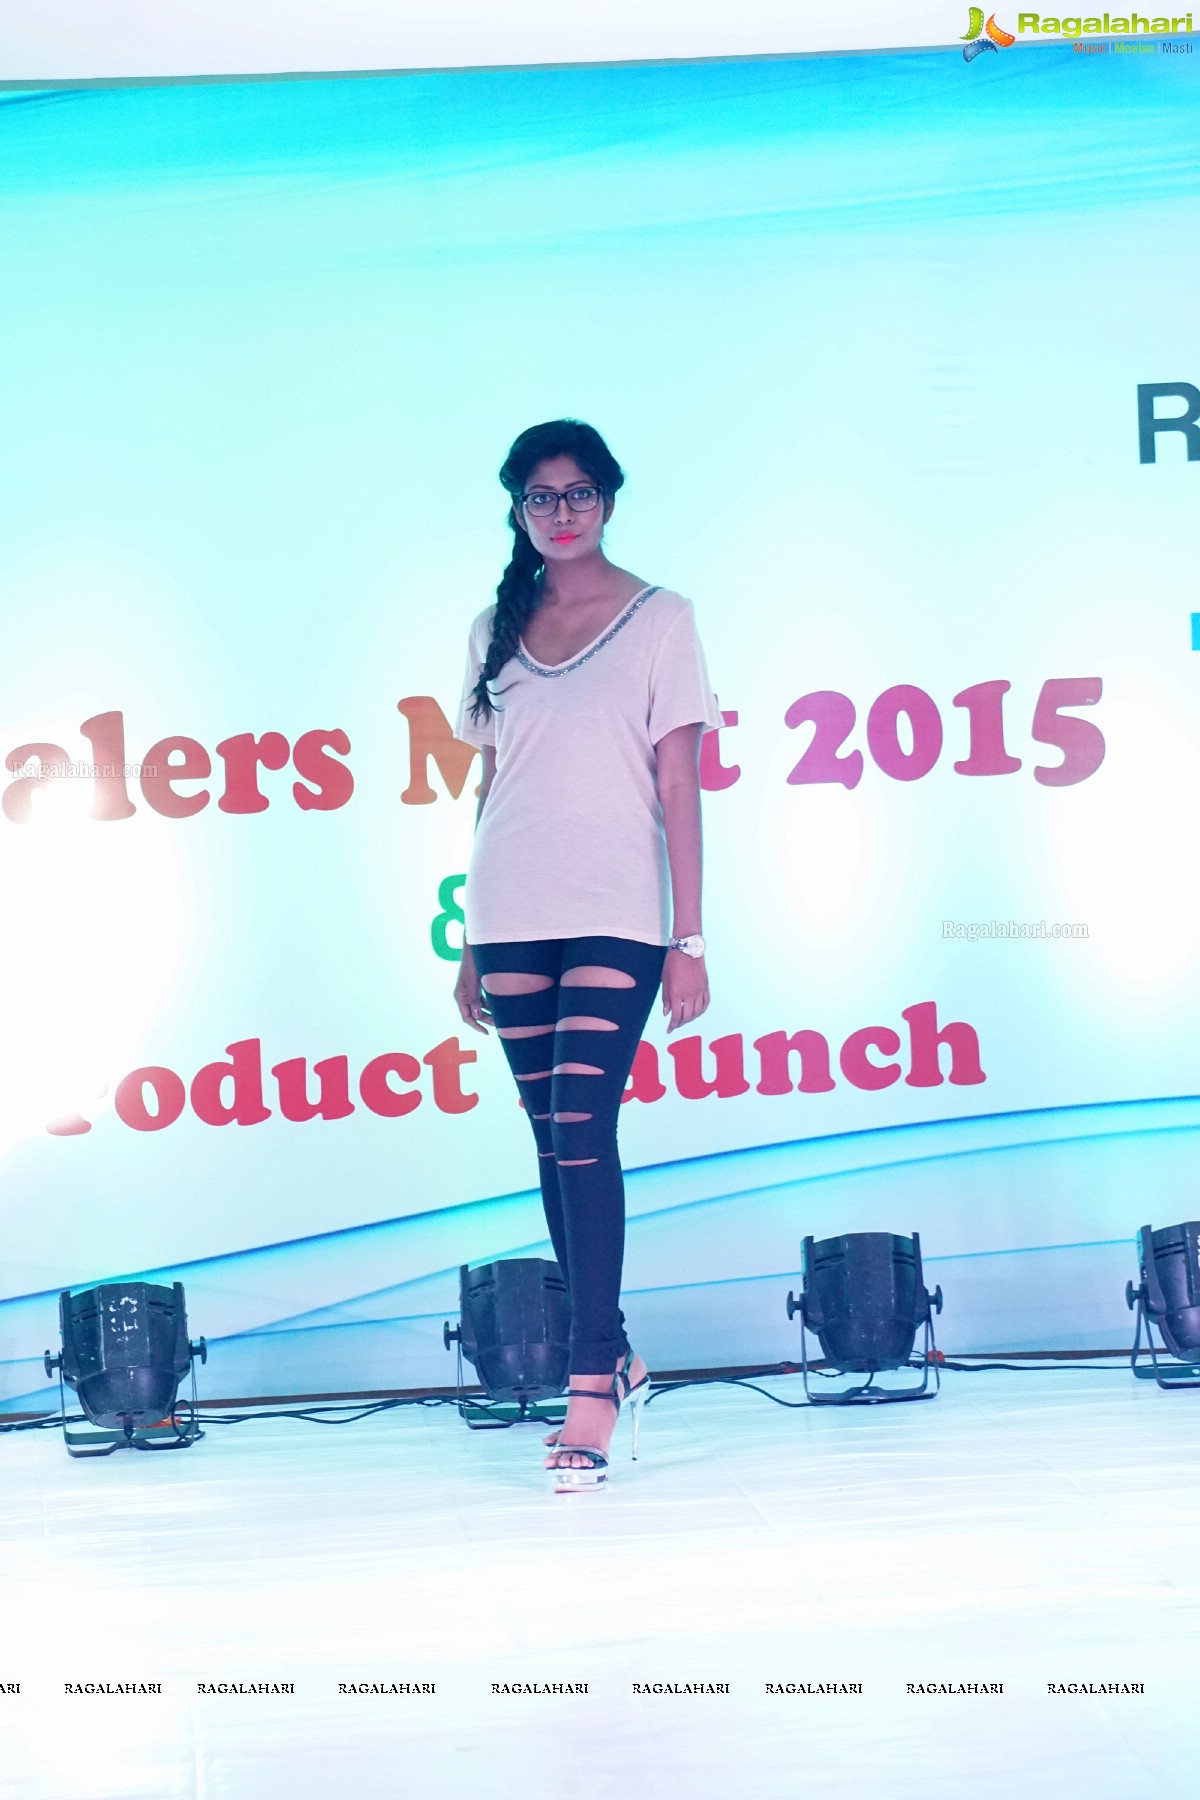 UNO Minda and Rangoli Marketing Company Grand Car Accessories Launch and Fashion Show at Mariott